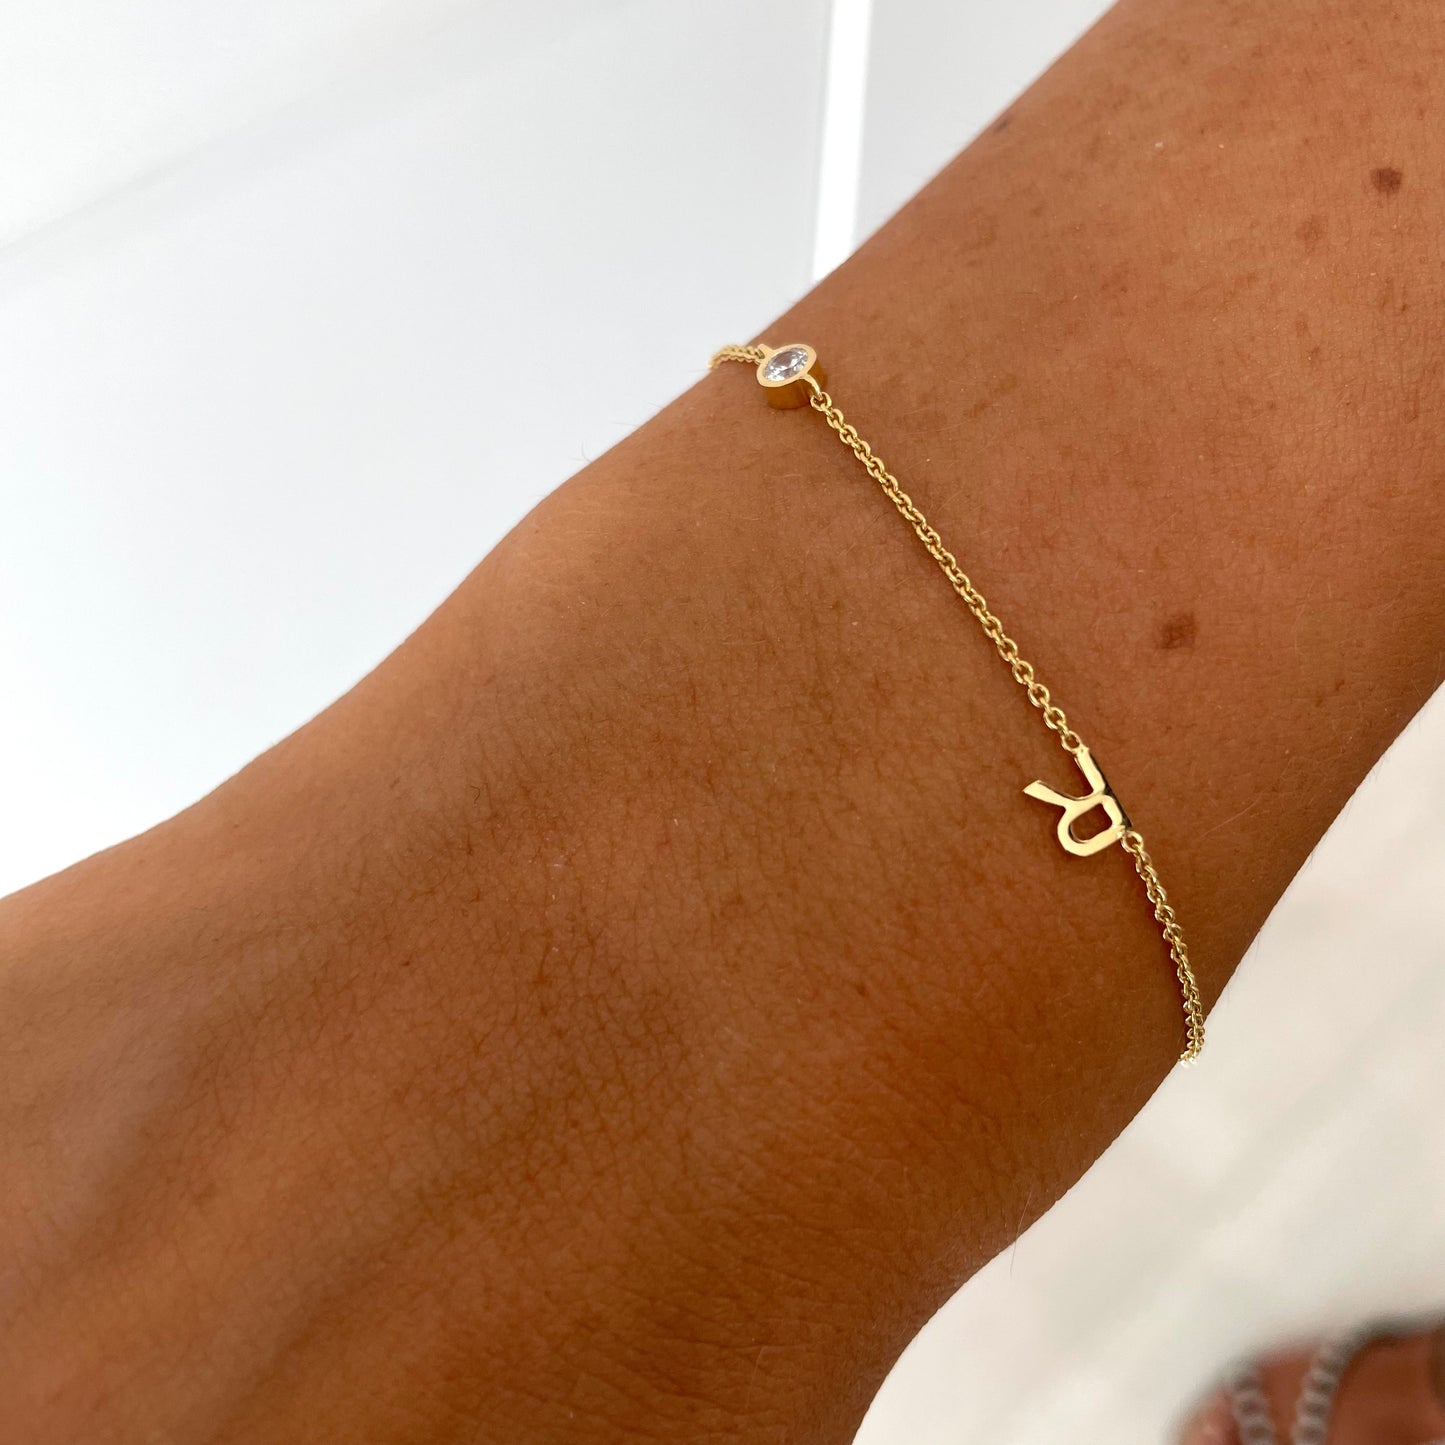 Initials and Diamond Bracelet - - Jewelry - Goldie Paris Jewelry - Bracelet Moms